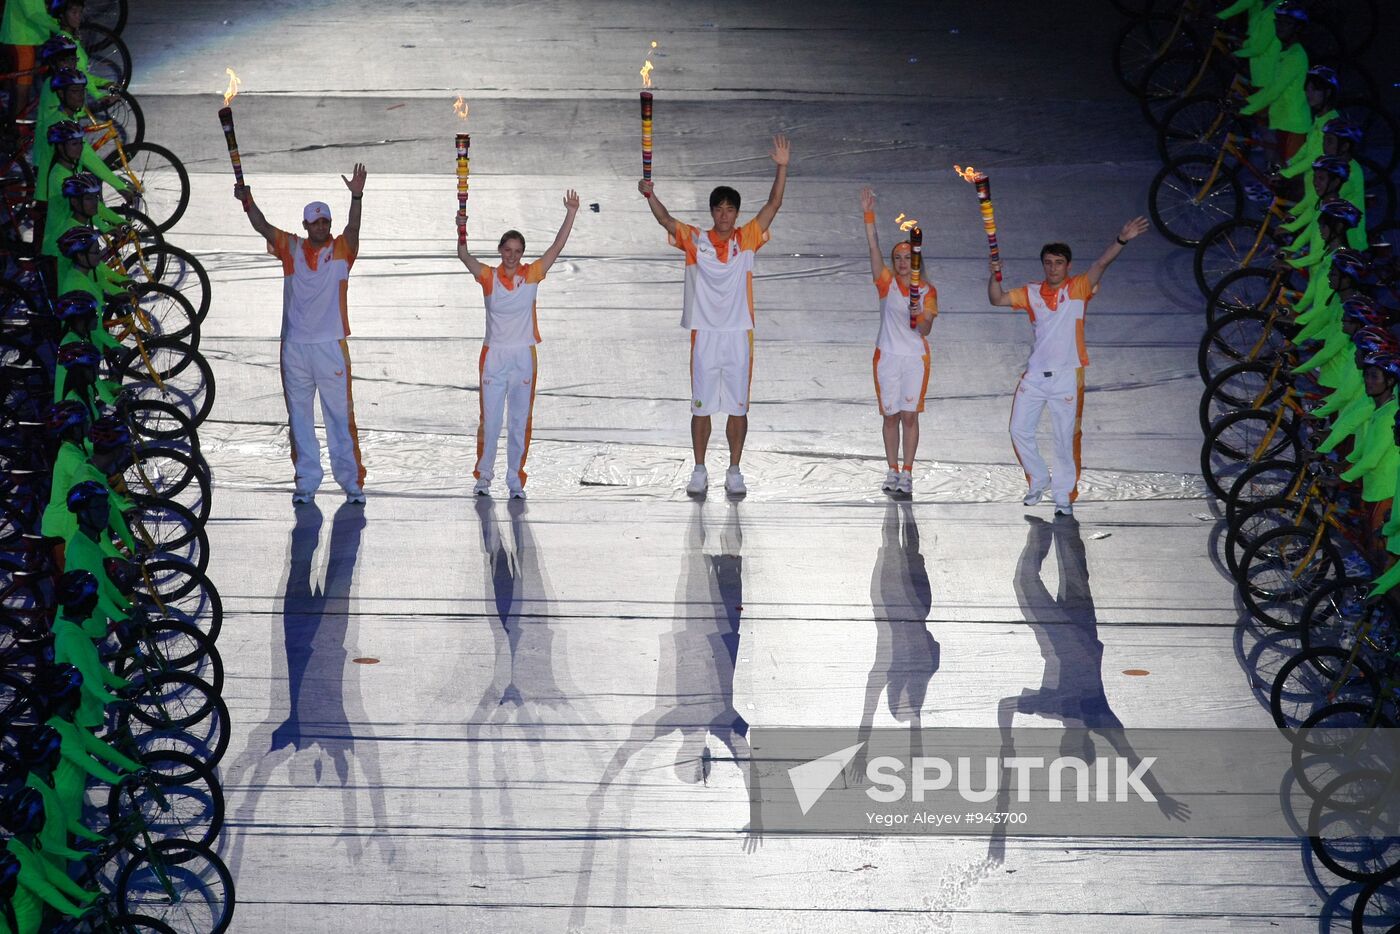 26th Summer Universiade Opening Ceremony